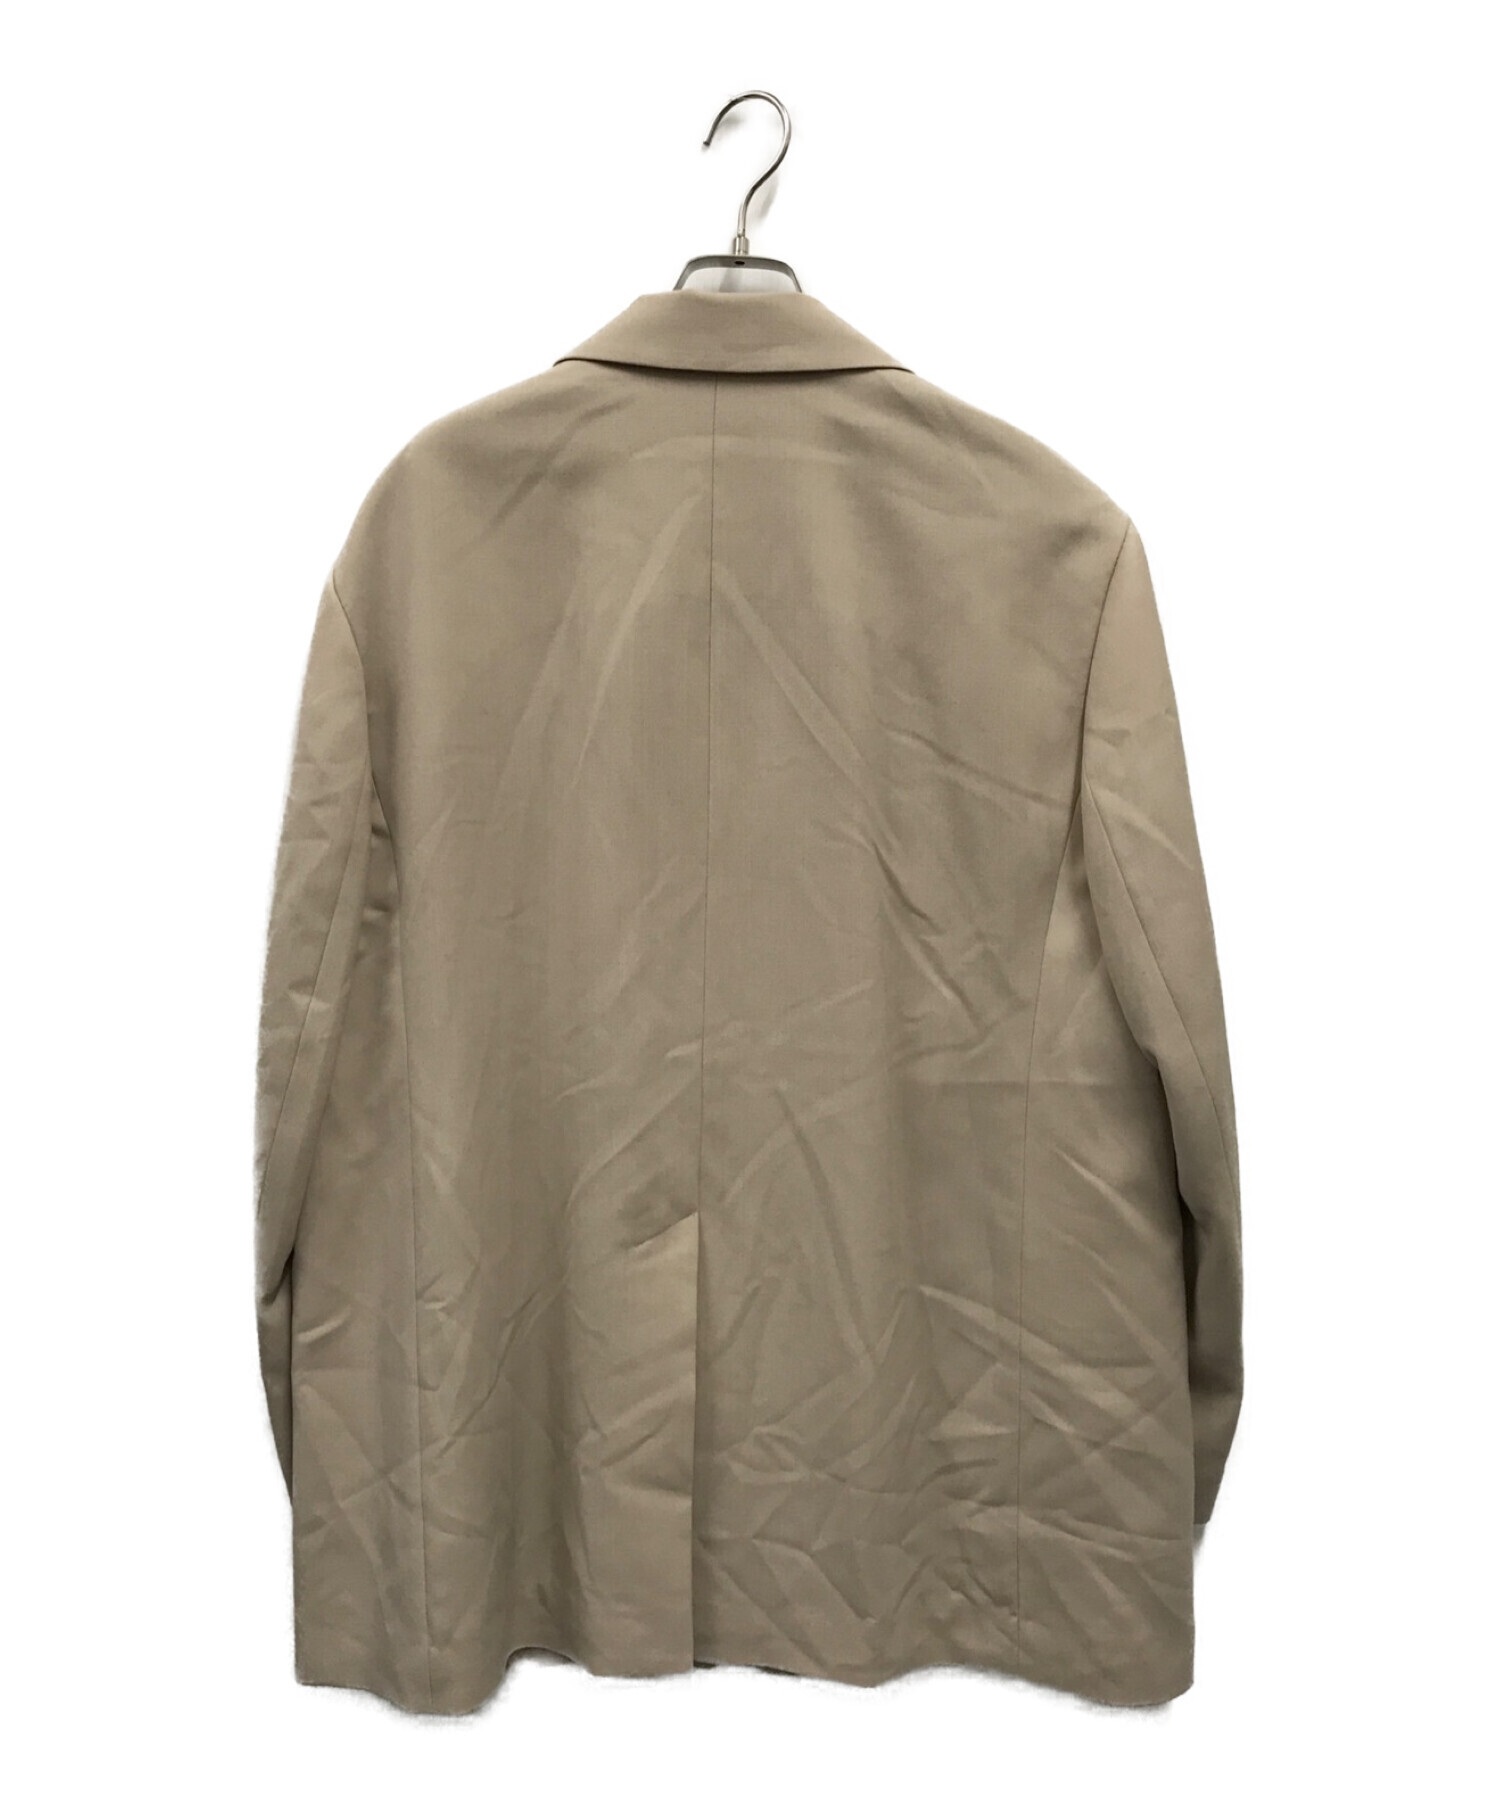 LE CIEL BLEU (ルシェルブルー) オーバーサイズテーラードジャケット / Oversized Tailored Jacket ベージュ  サイズ:36